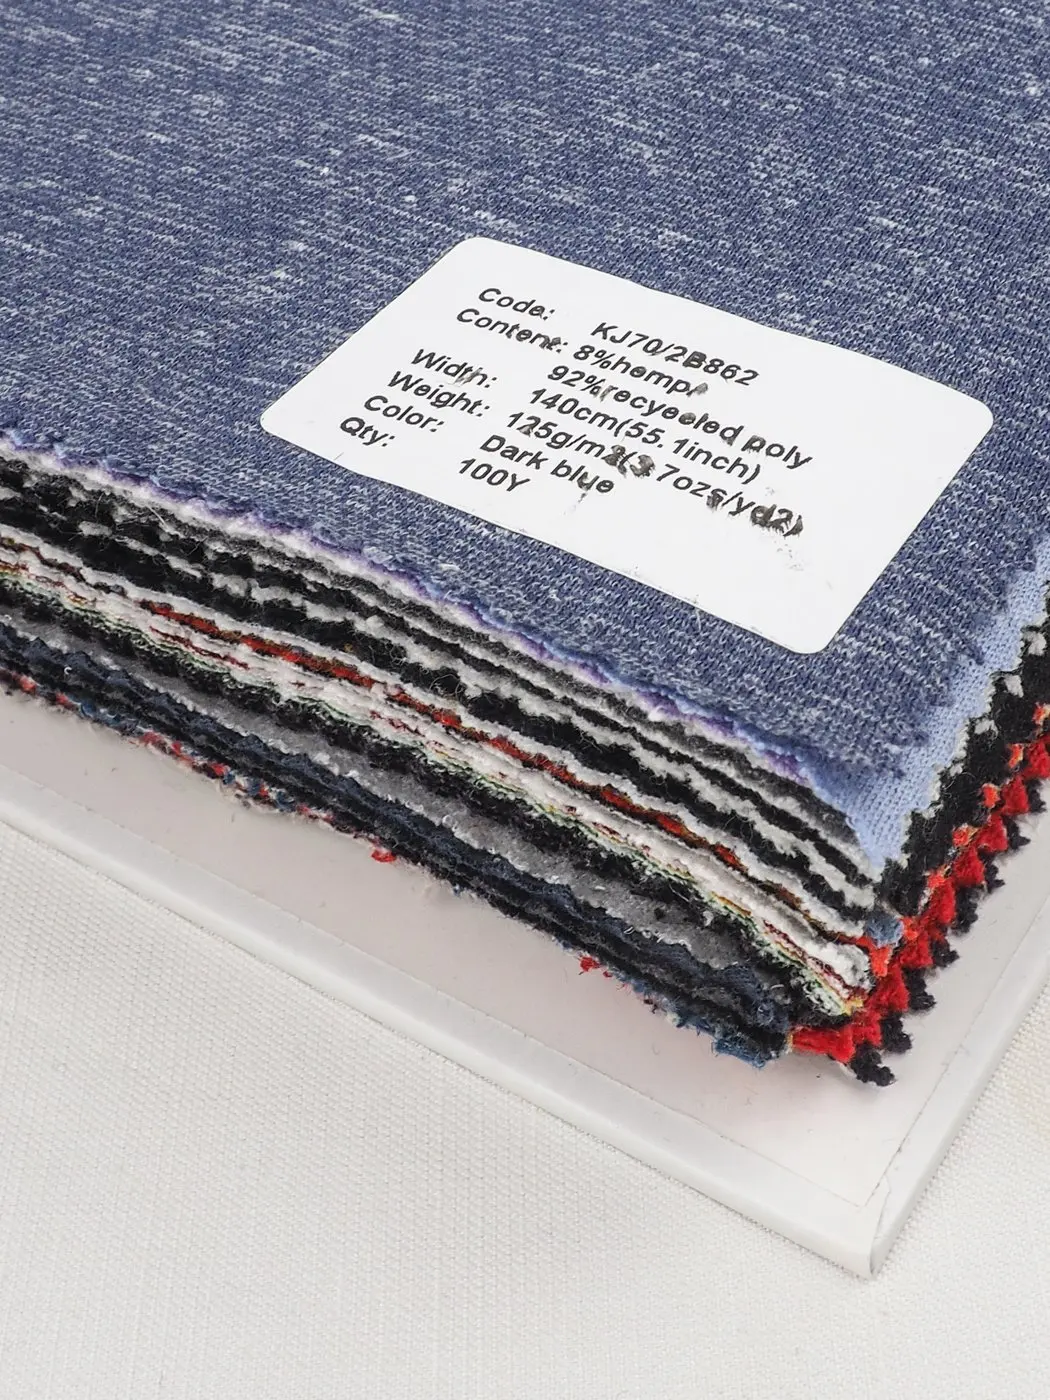 
Hemp Fabric Stock Swatches Ready To Ship No MOQ(Knit swatch book) 